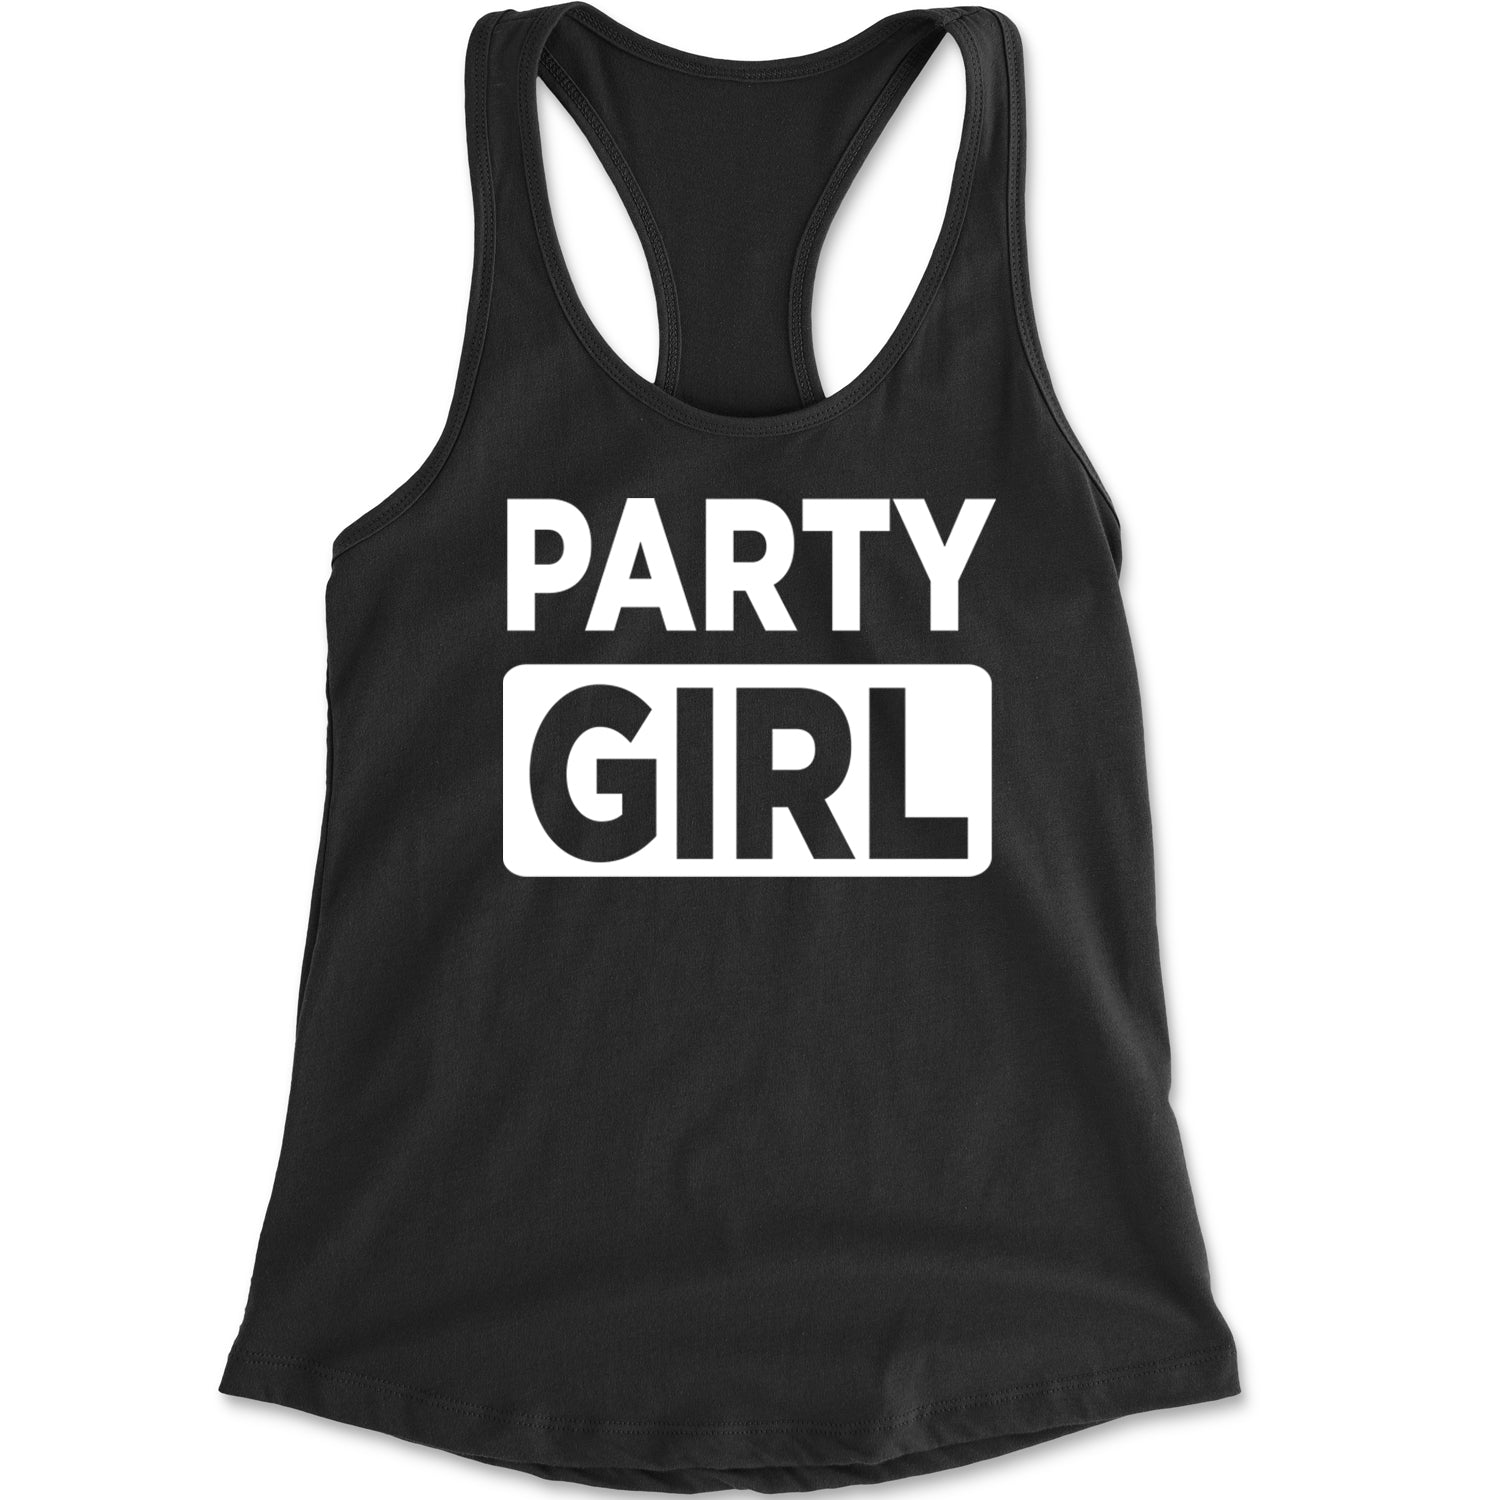 Party Girl Club Brat Racerback Tank Top for Women